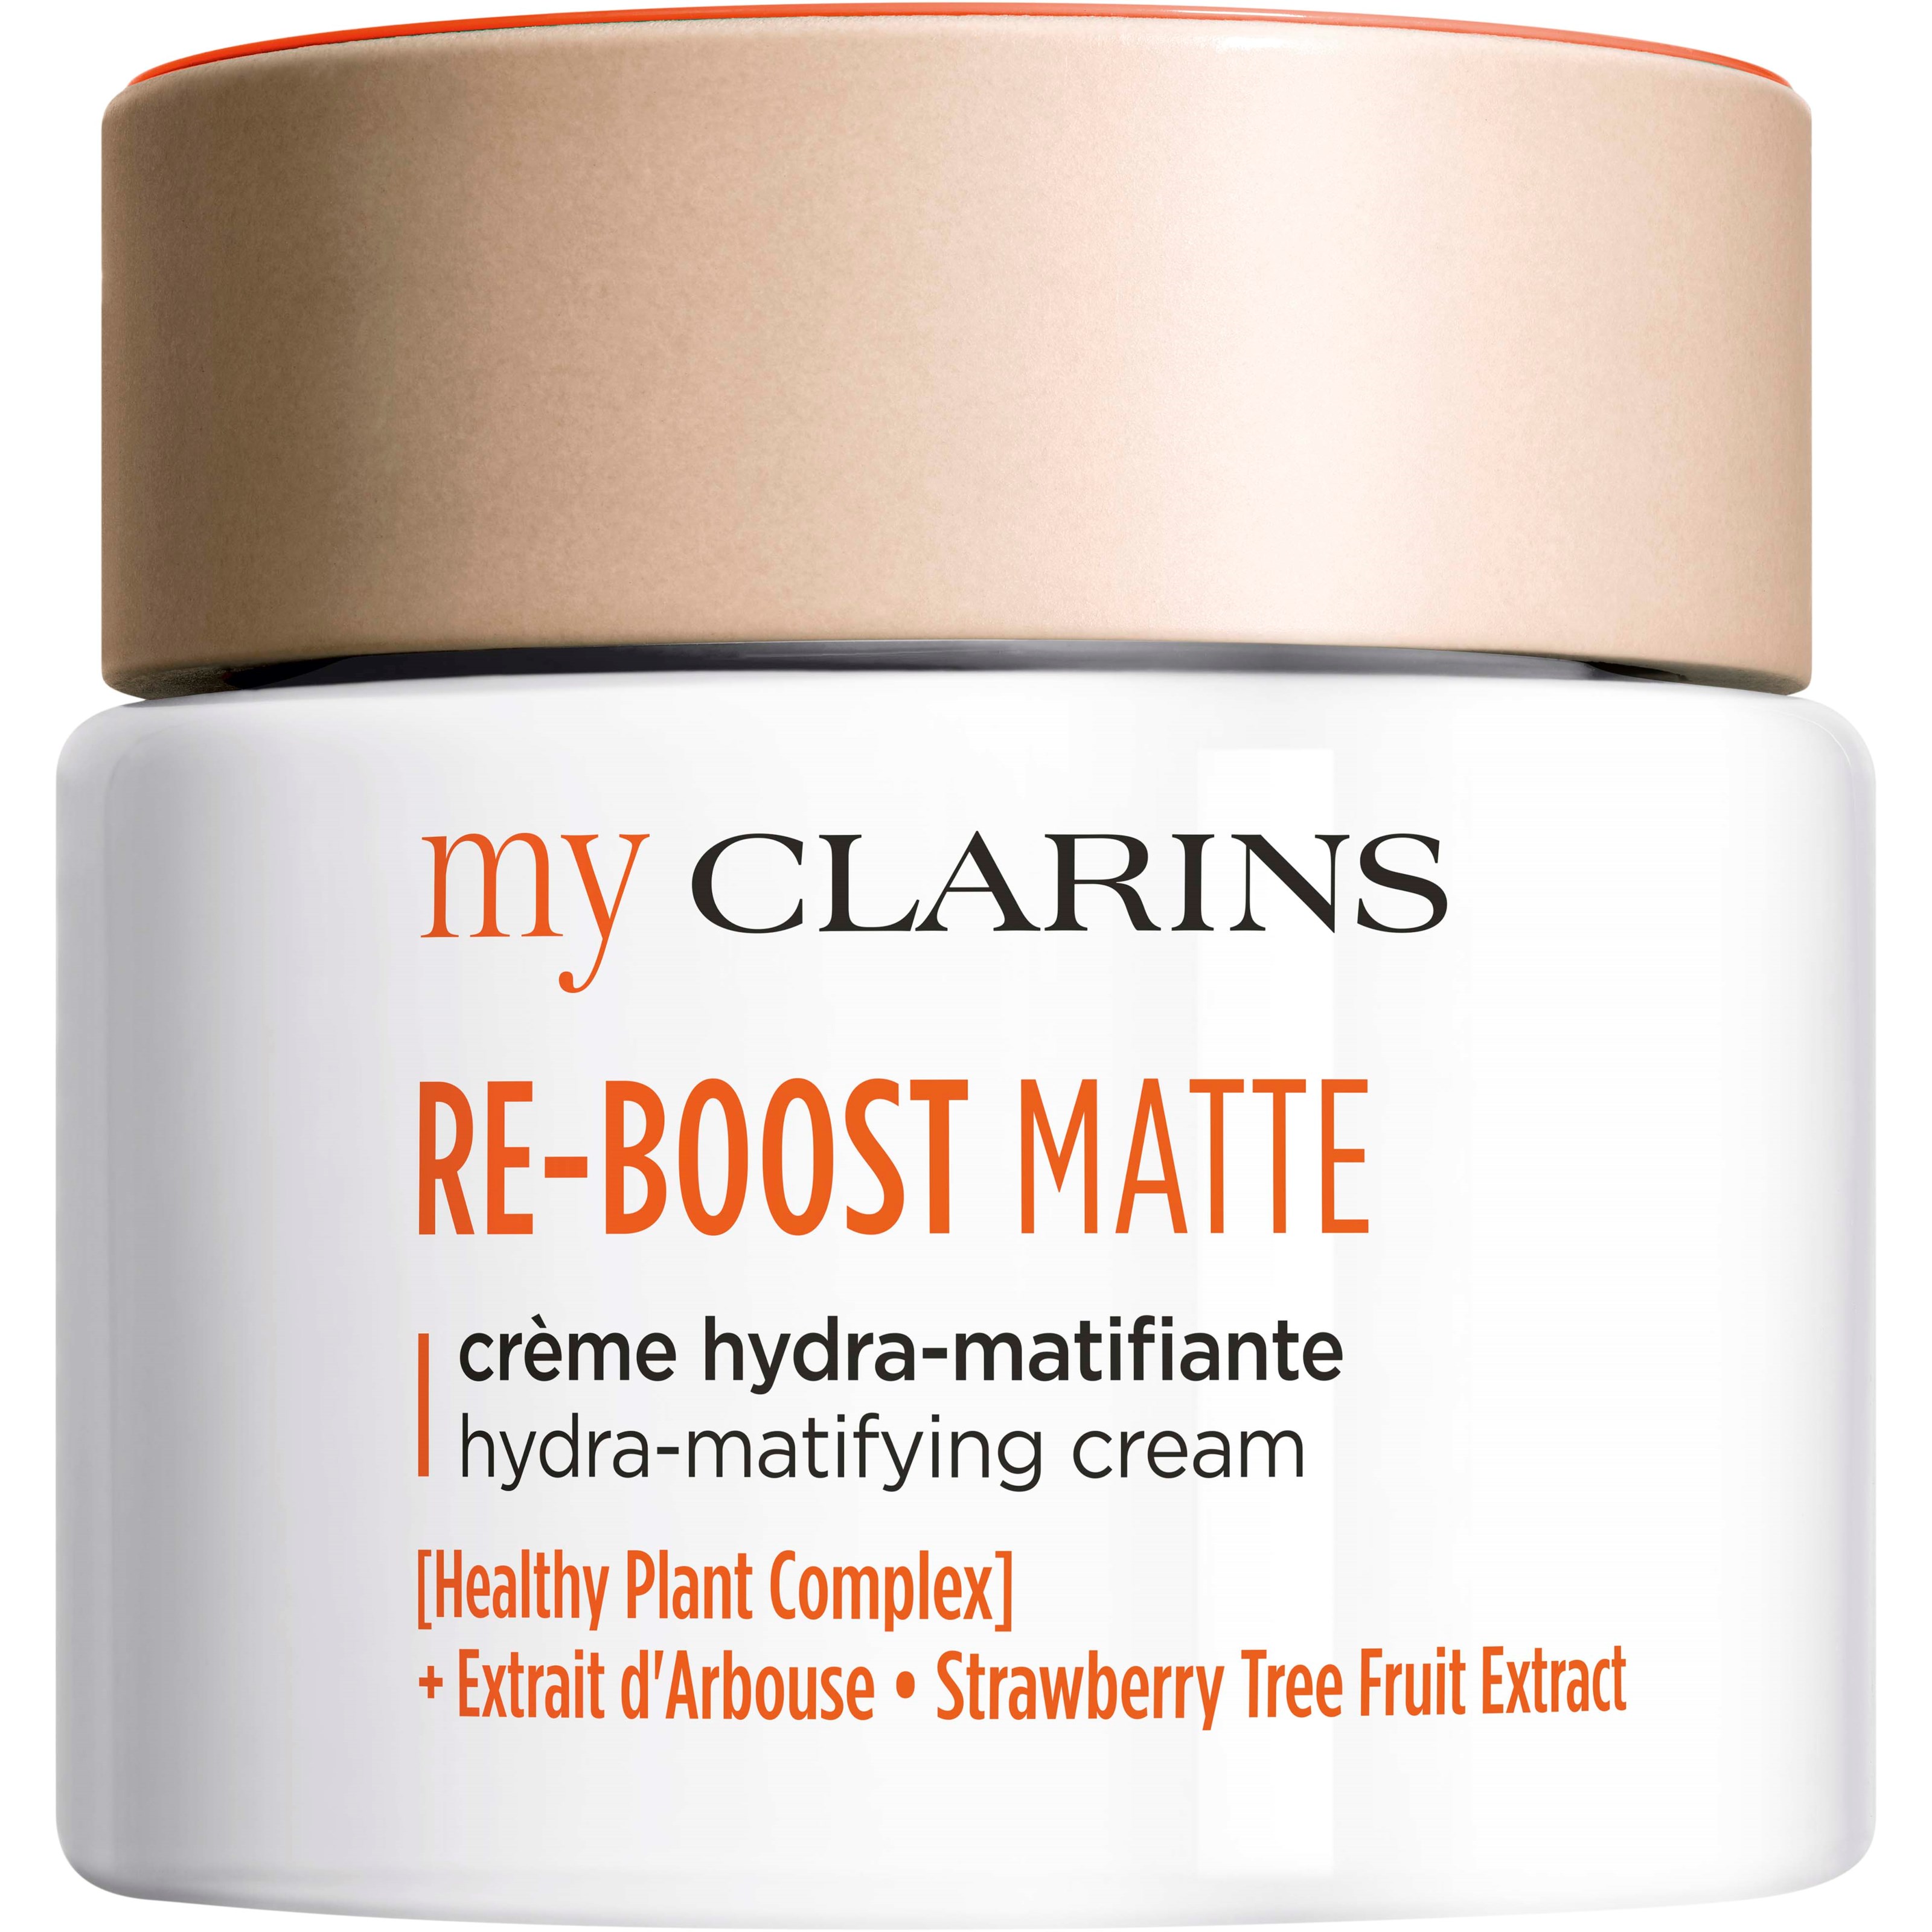 Bilde av Clarins My Clarins Re-boost Matte Hydra-matifying Cream 50 Ml